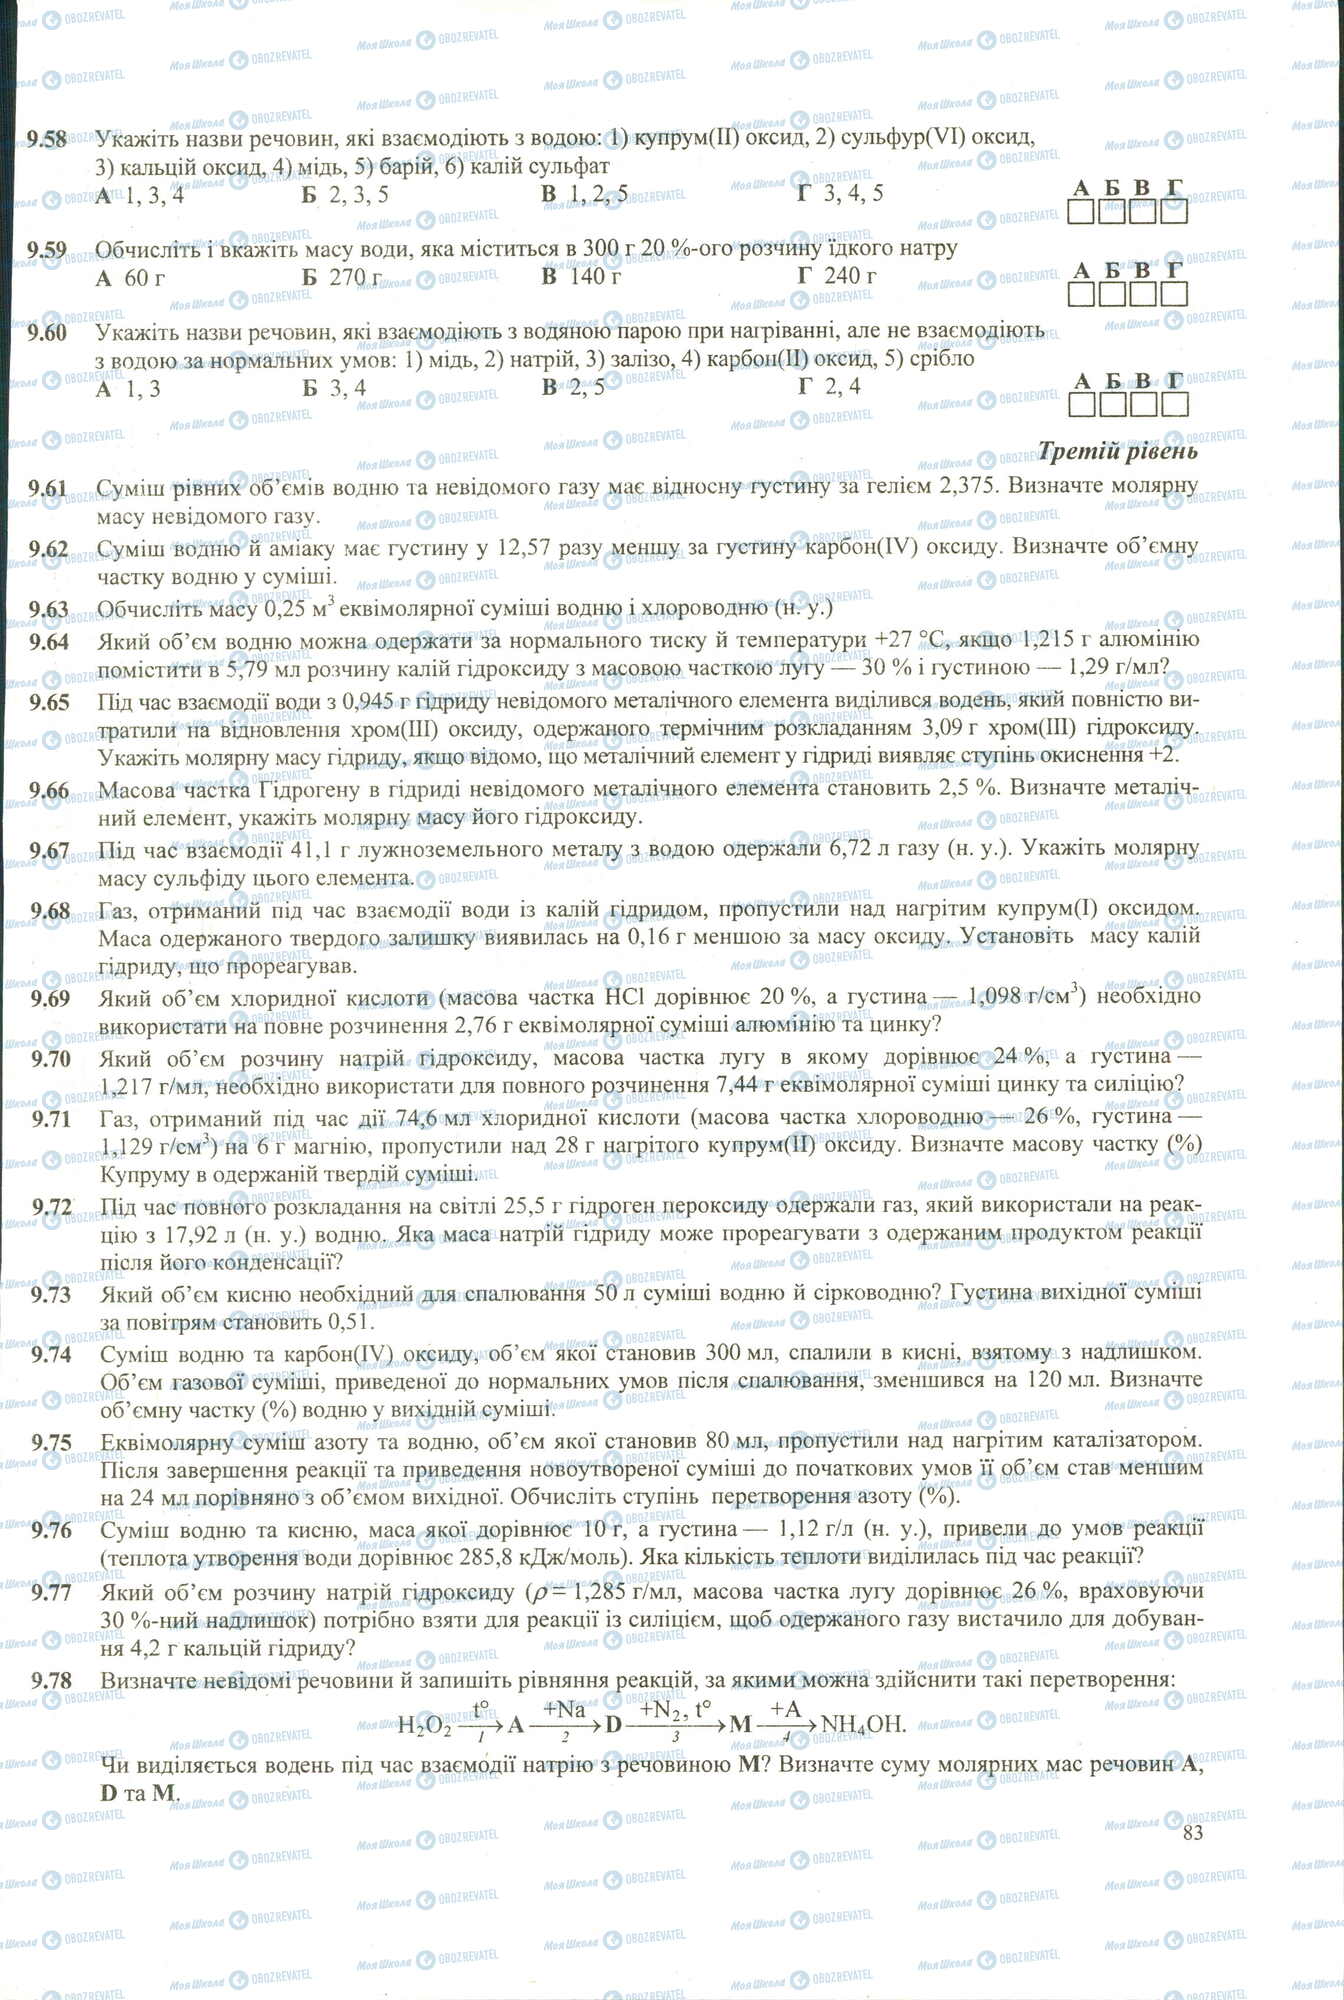 ЗНО Химия 11 класс страница 58-78